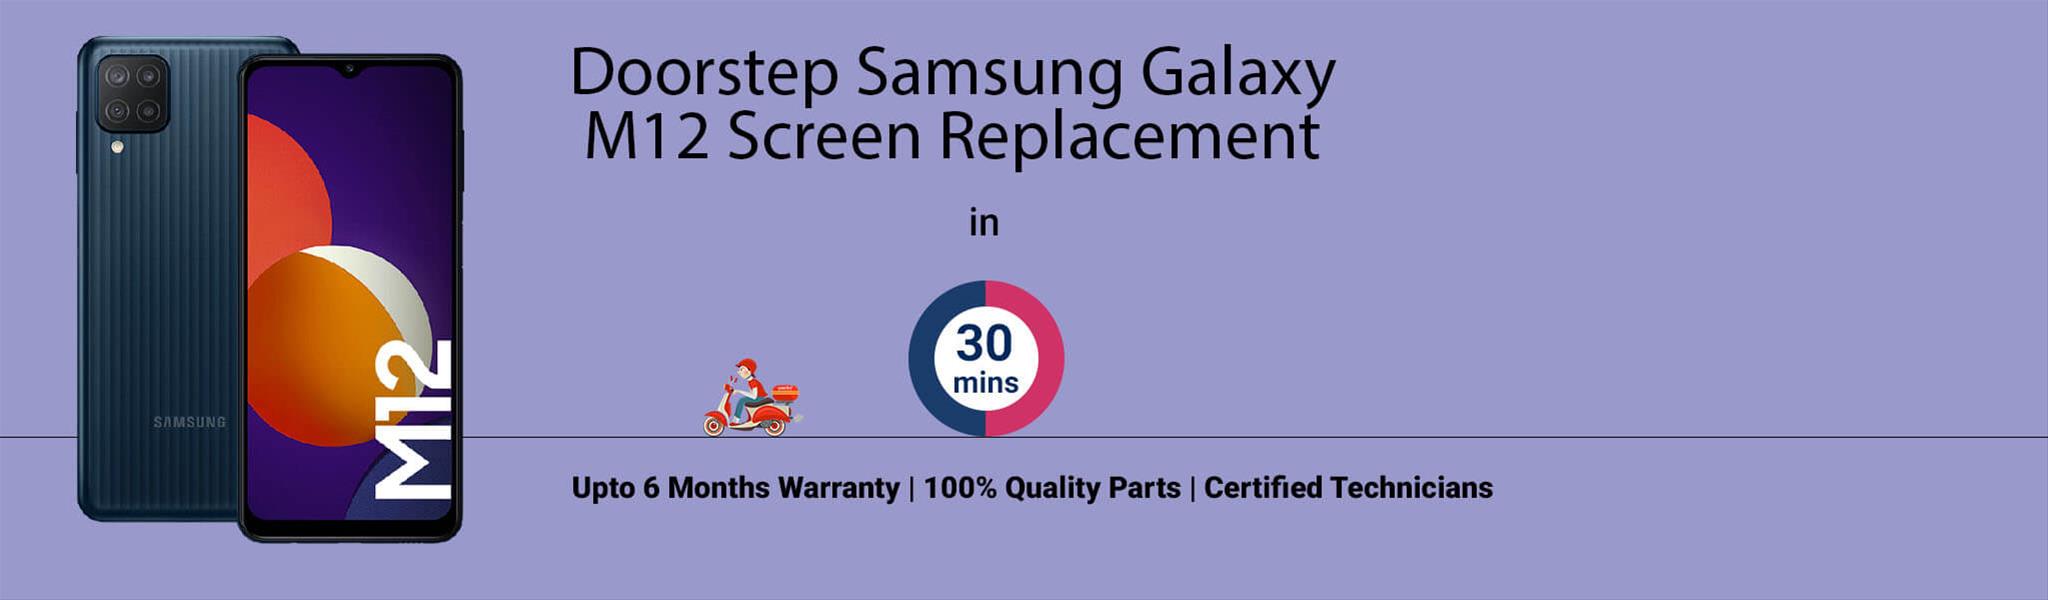 samsung-galaxy-m12-screen-replacement.jpg